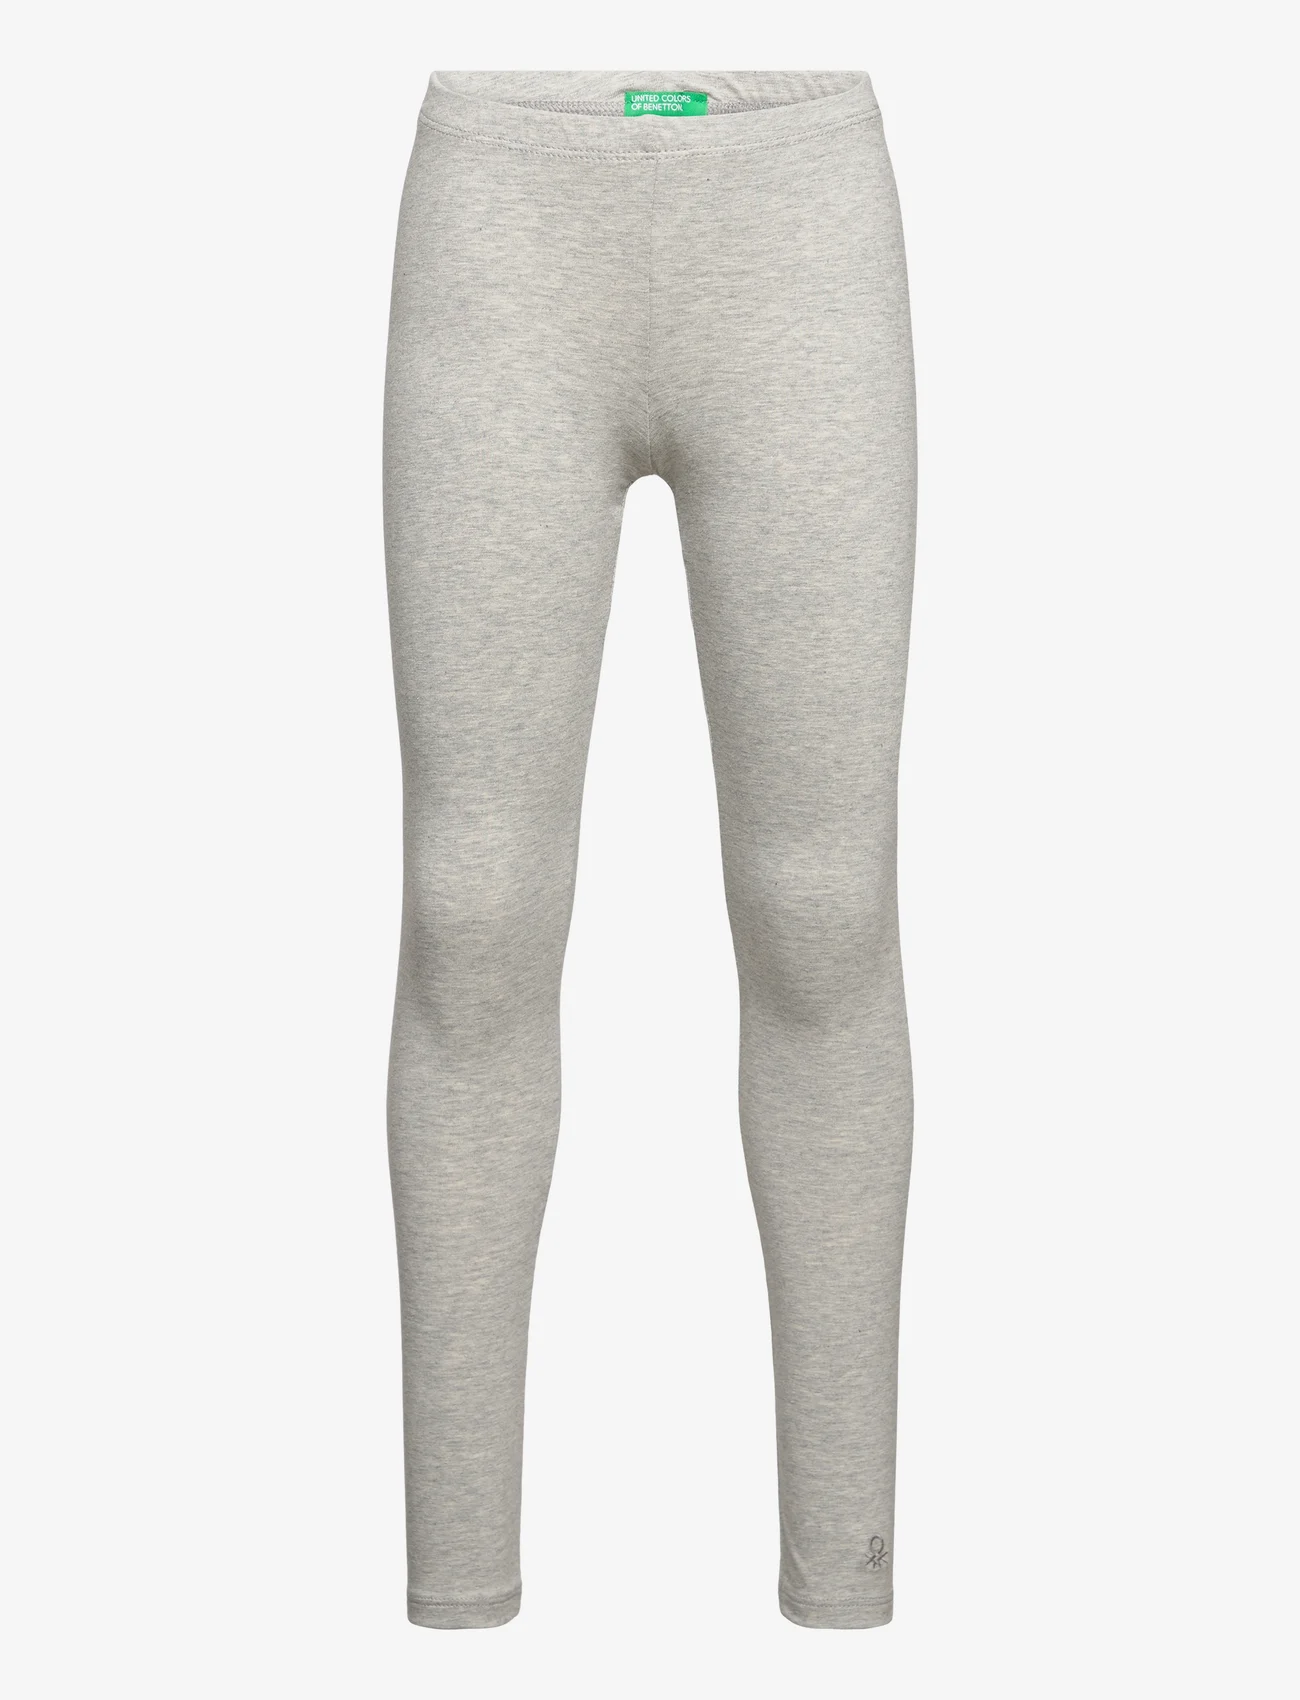 United Colors of Benetton - LEGGINGS - leggings - medium melange grey - 0